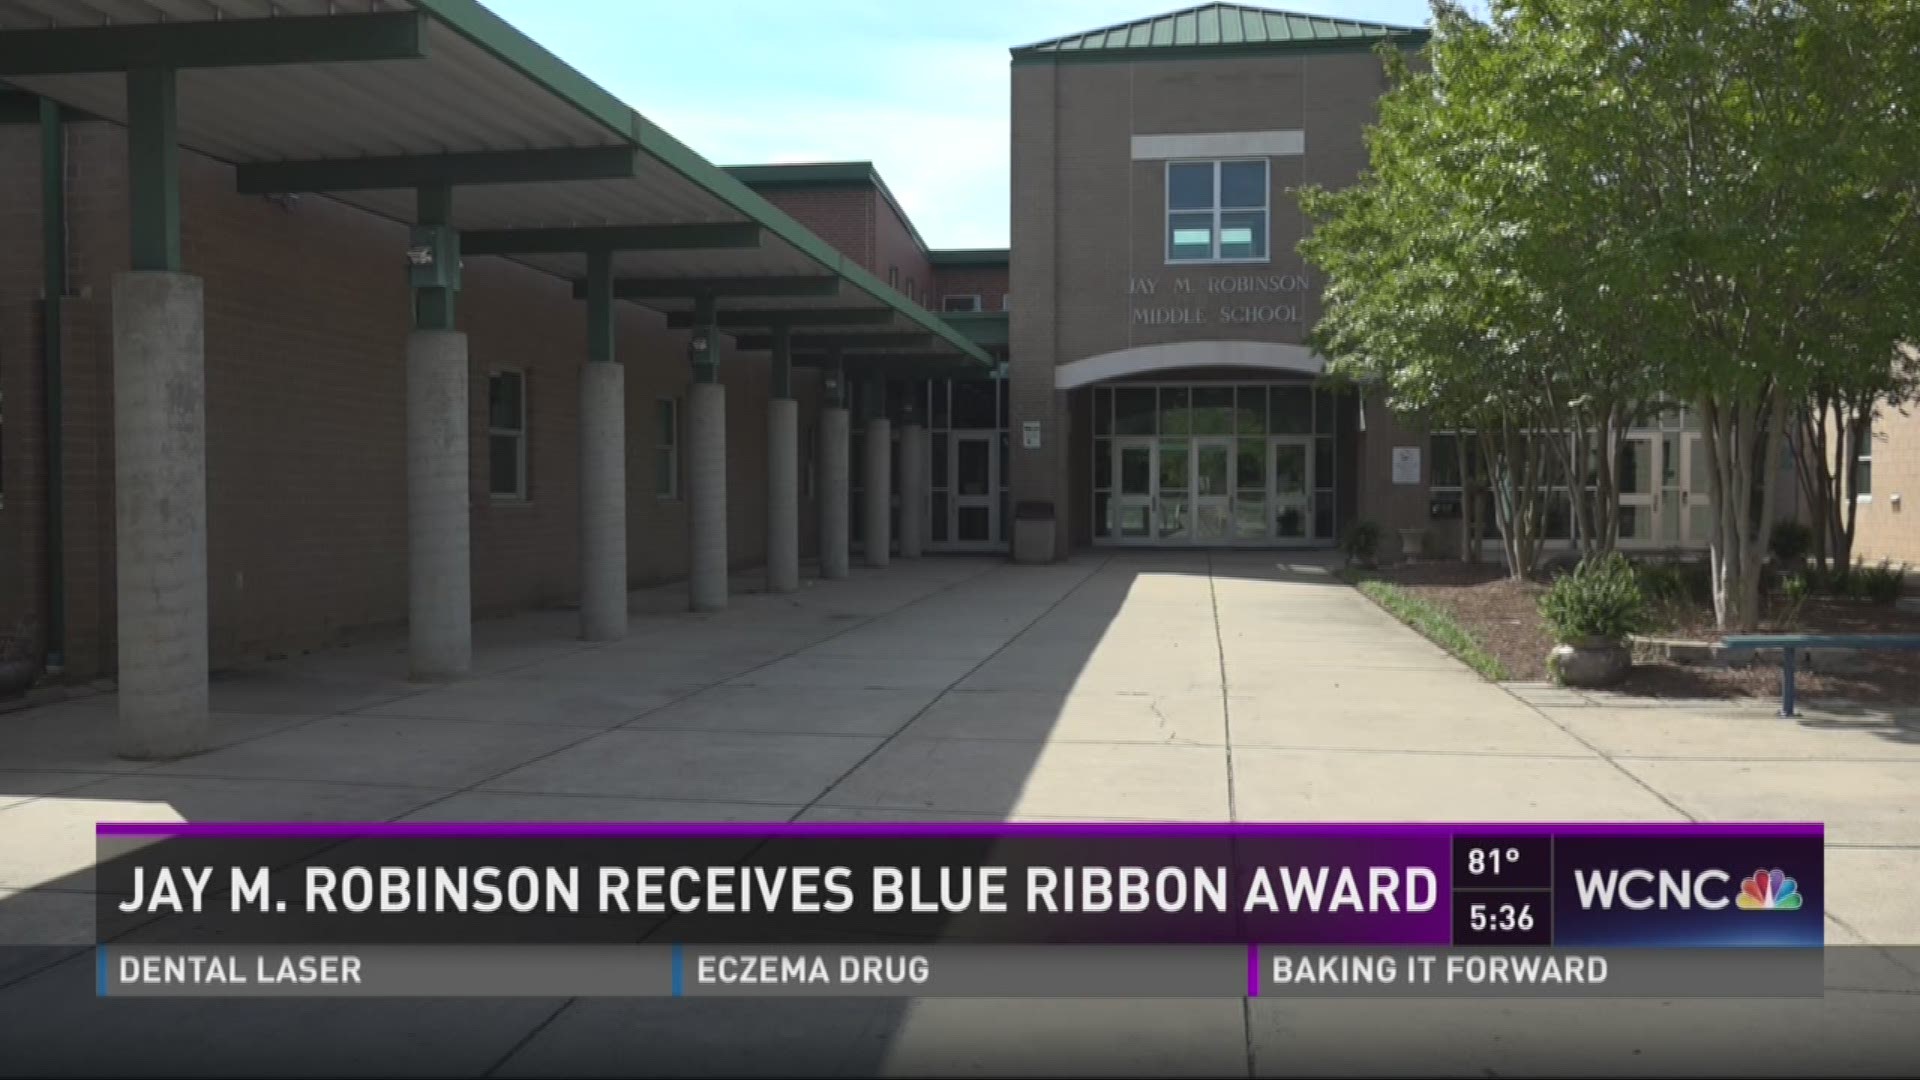 Jay M. Robinson Middle School receives National Blue Ribbon Award.